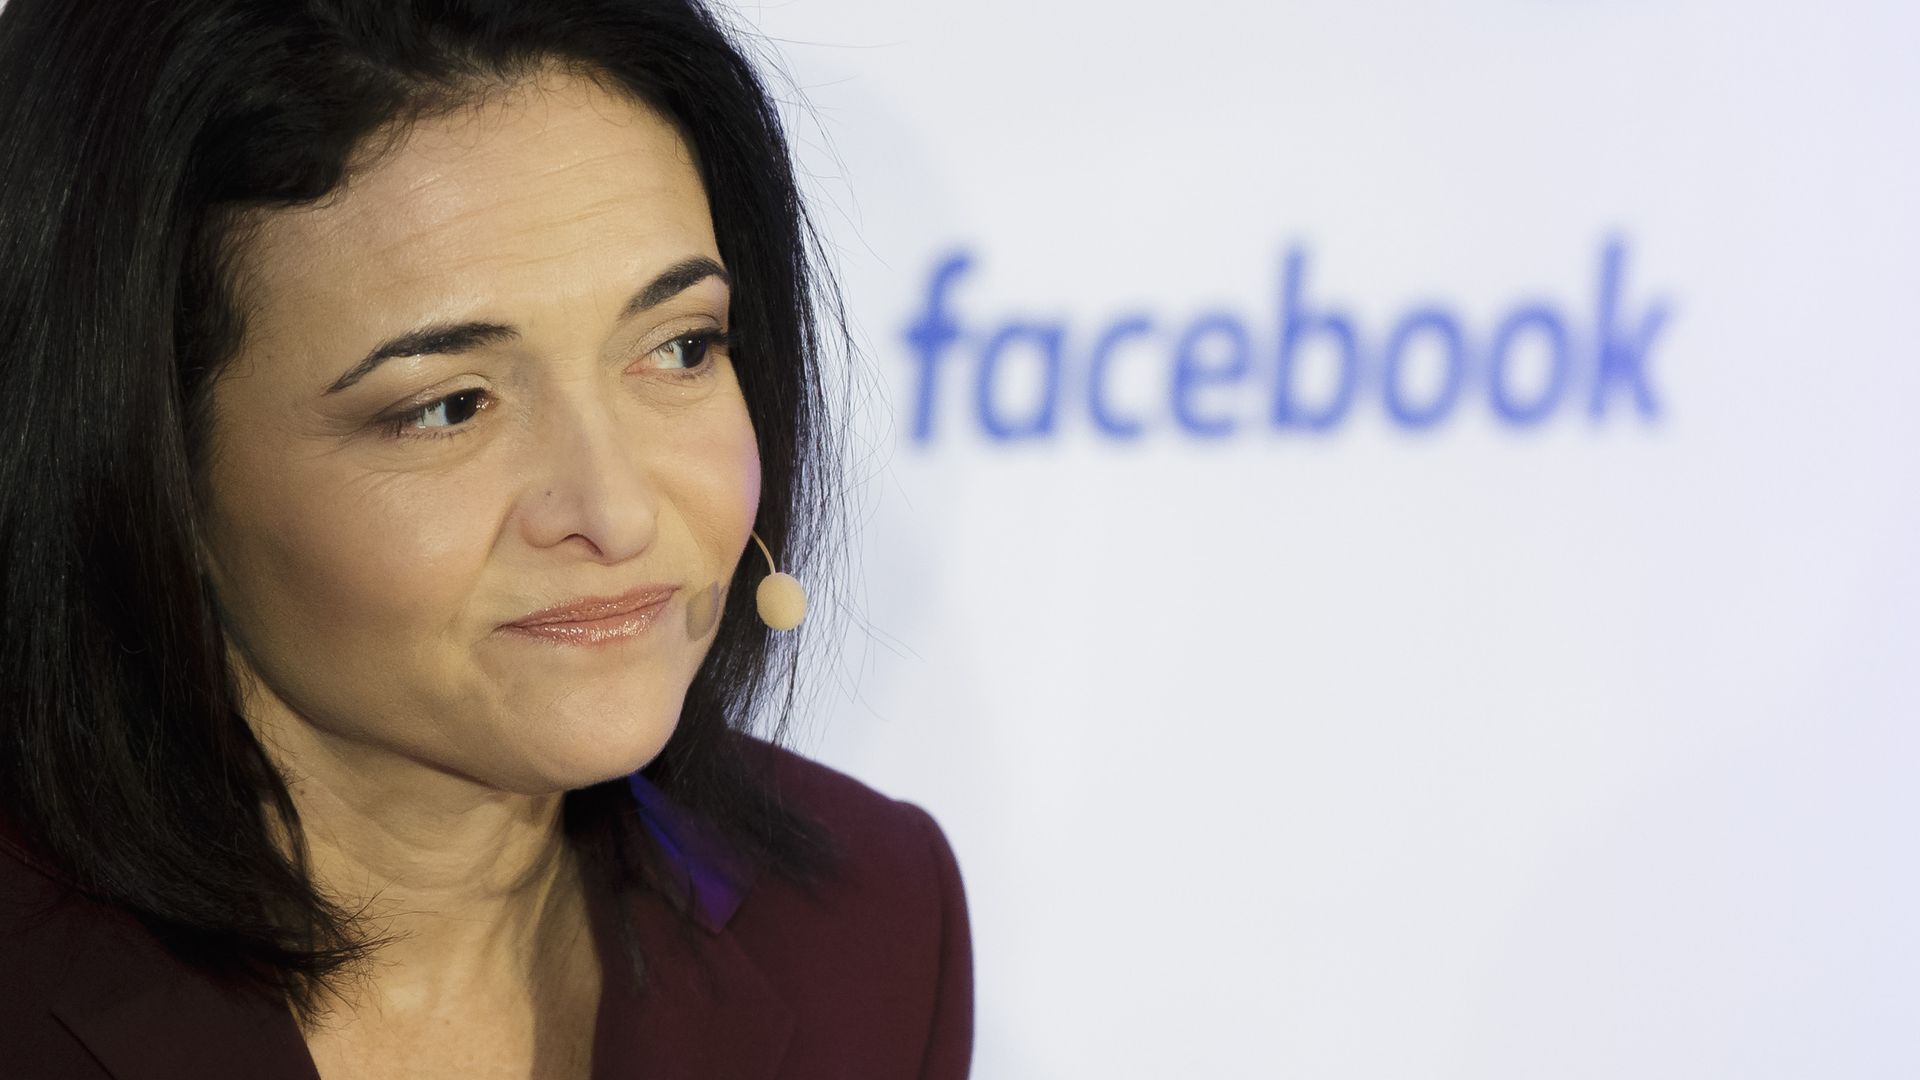  Chief Operating Officer at Facebook Sheryl Sandberg on January 18, 2016 in Berlin, Germany. 